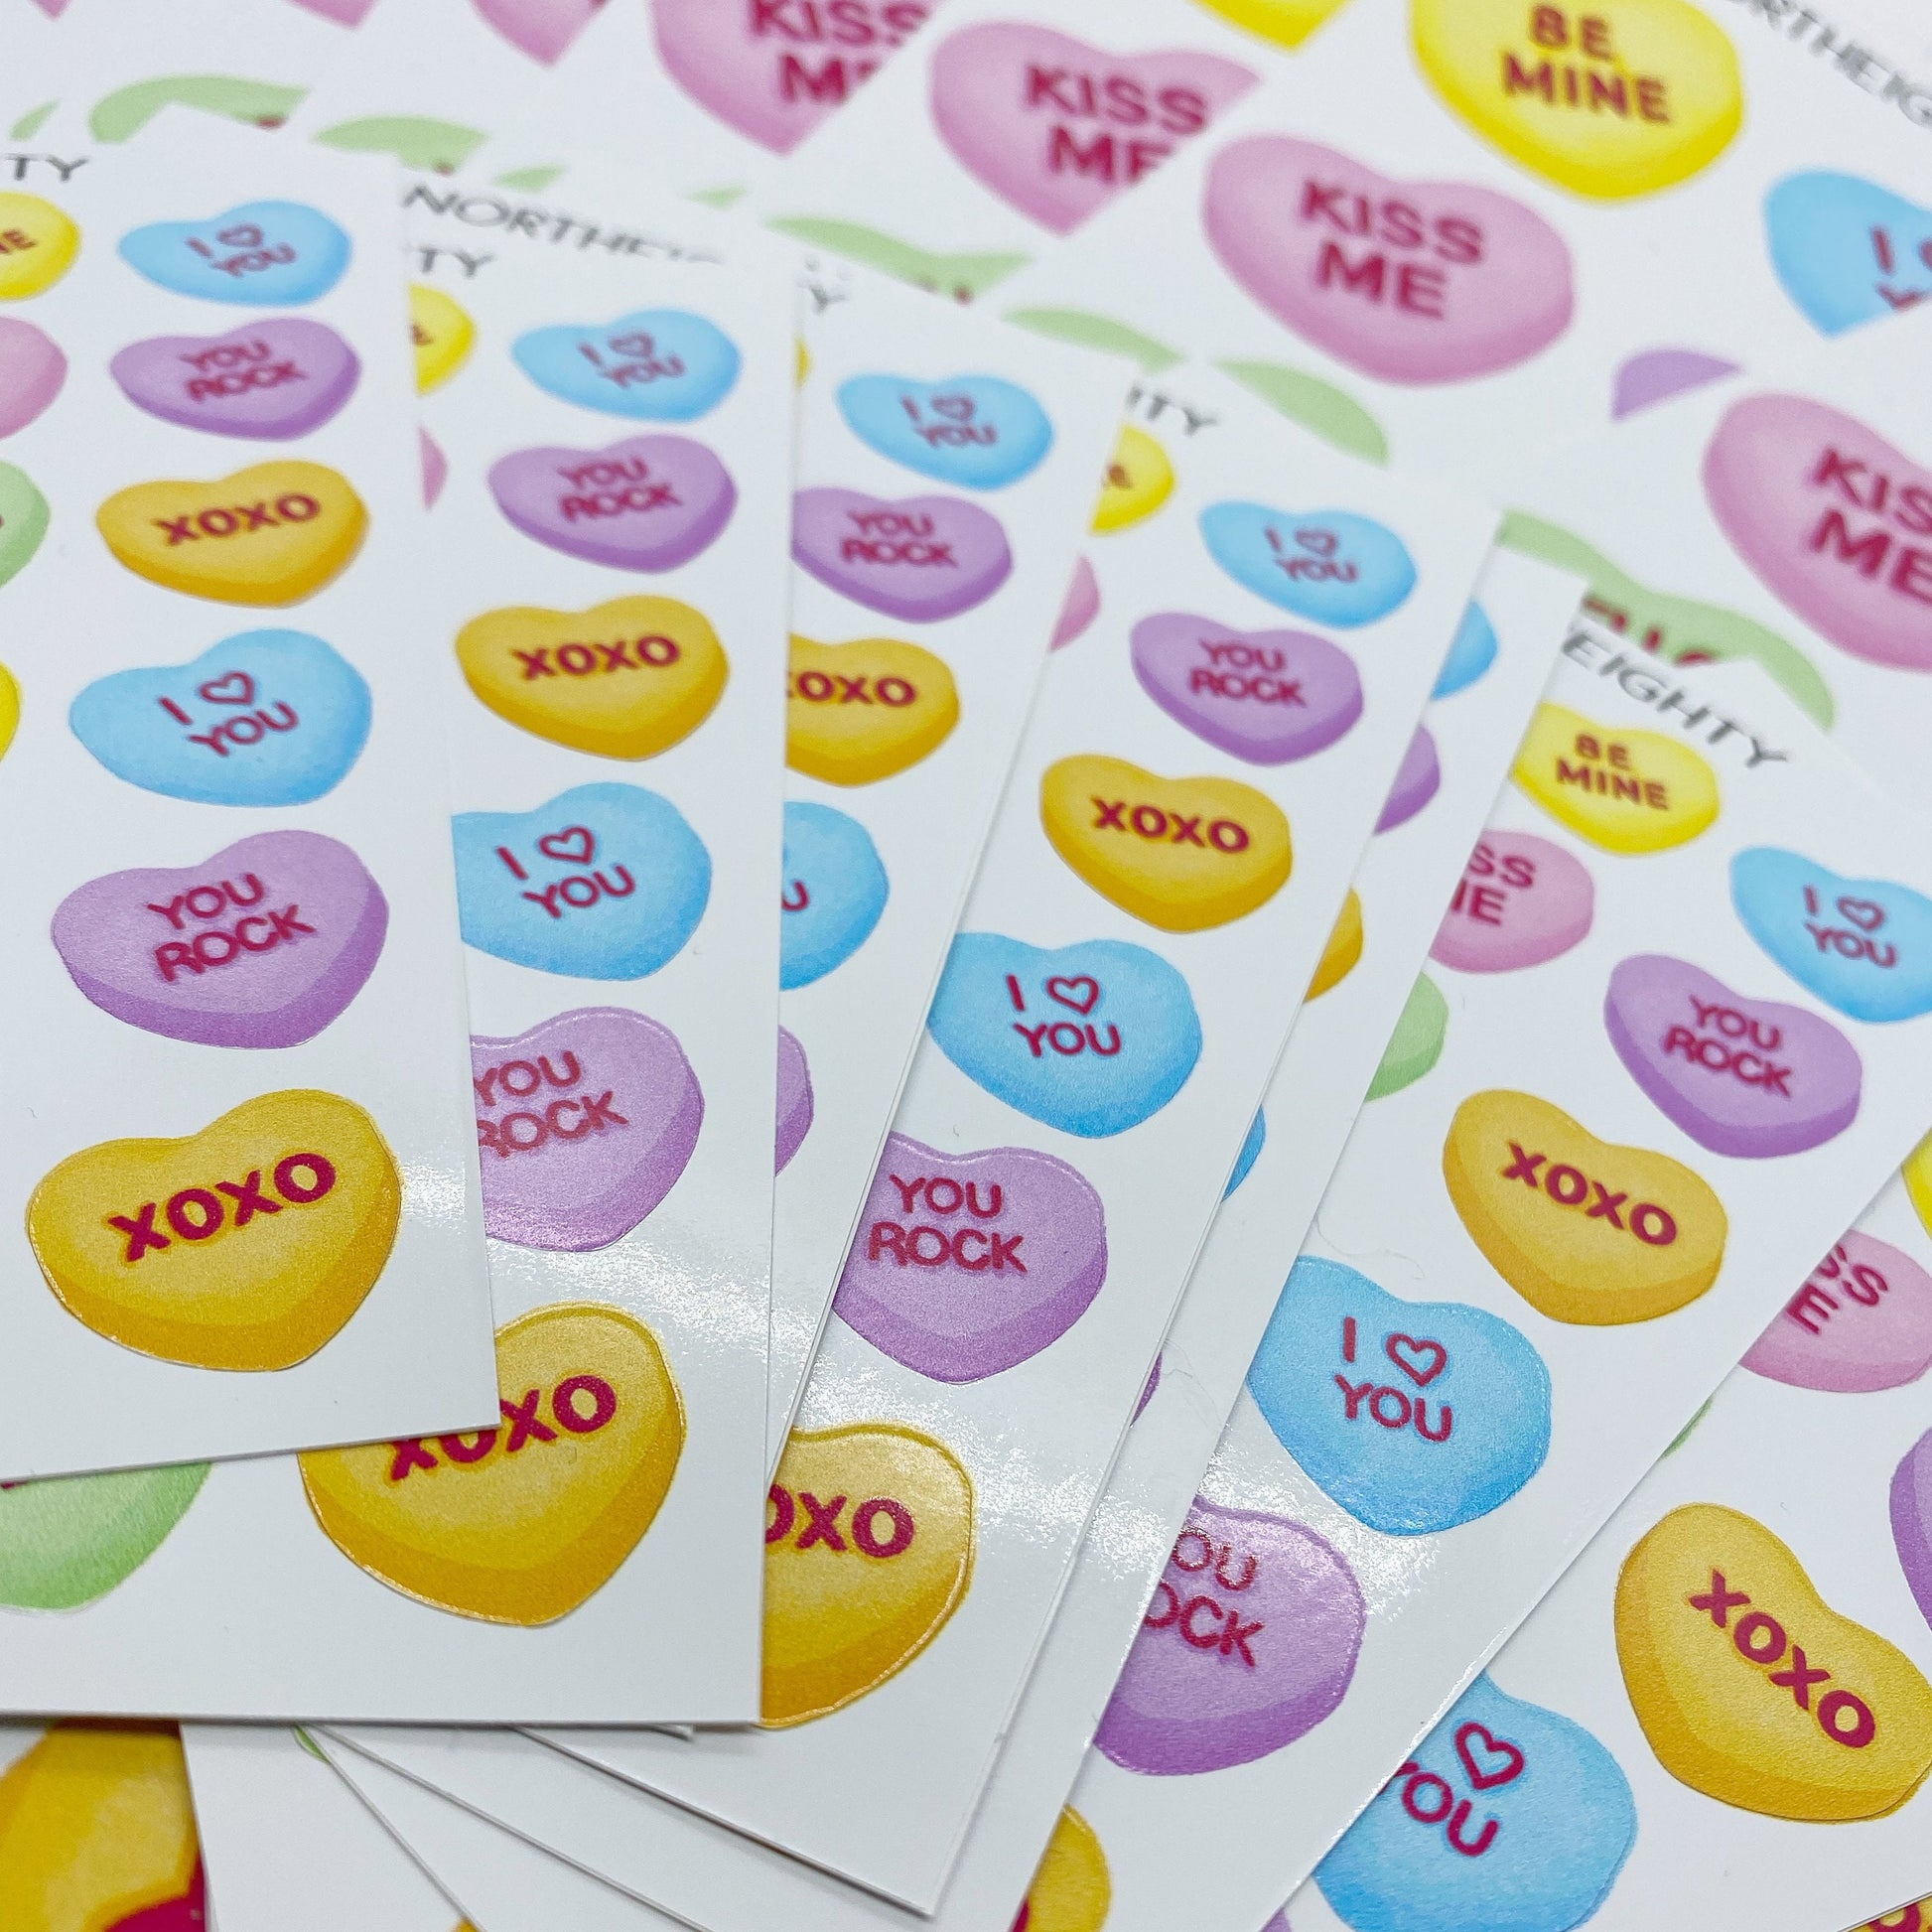 Vinyl Decals - Candy Hearts Sticker Sheet - Waterproof - Laptop - Tumbler Decals - Stand Mixer - Sticker Sheets - Valentine's Day - Stickers